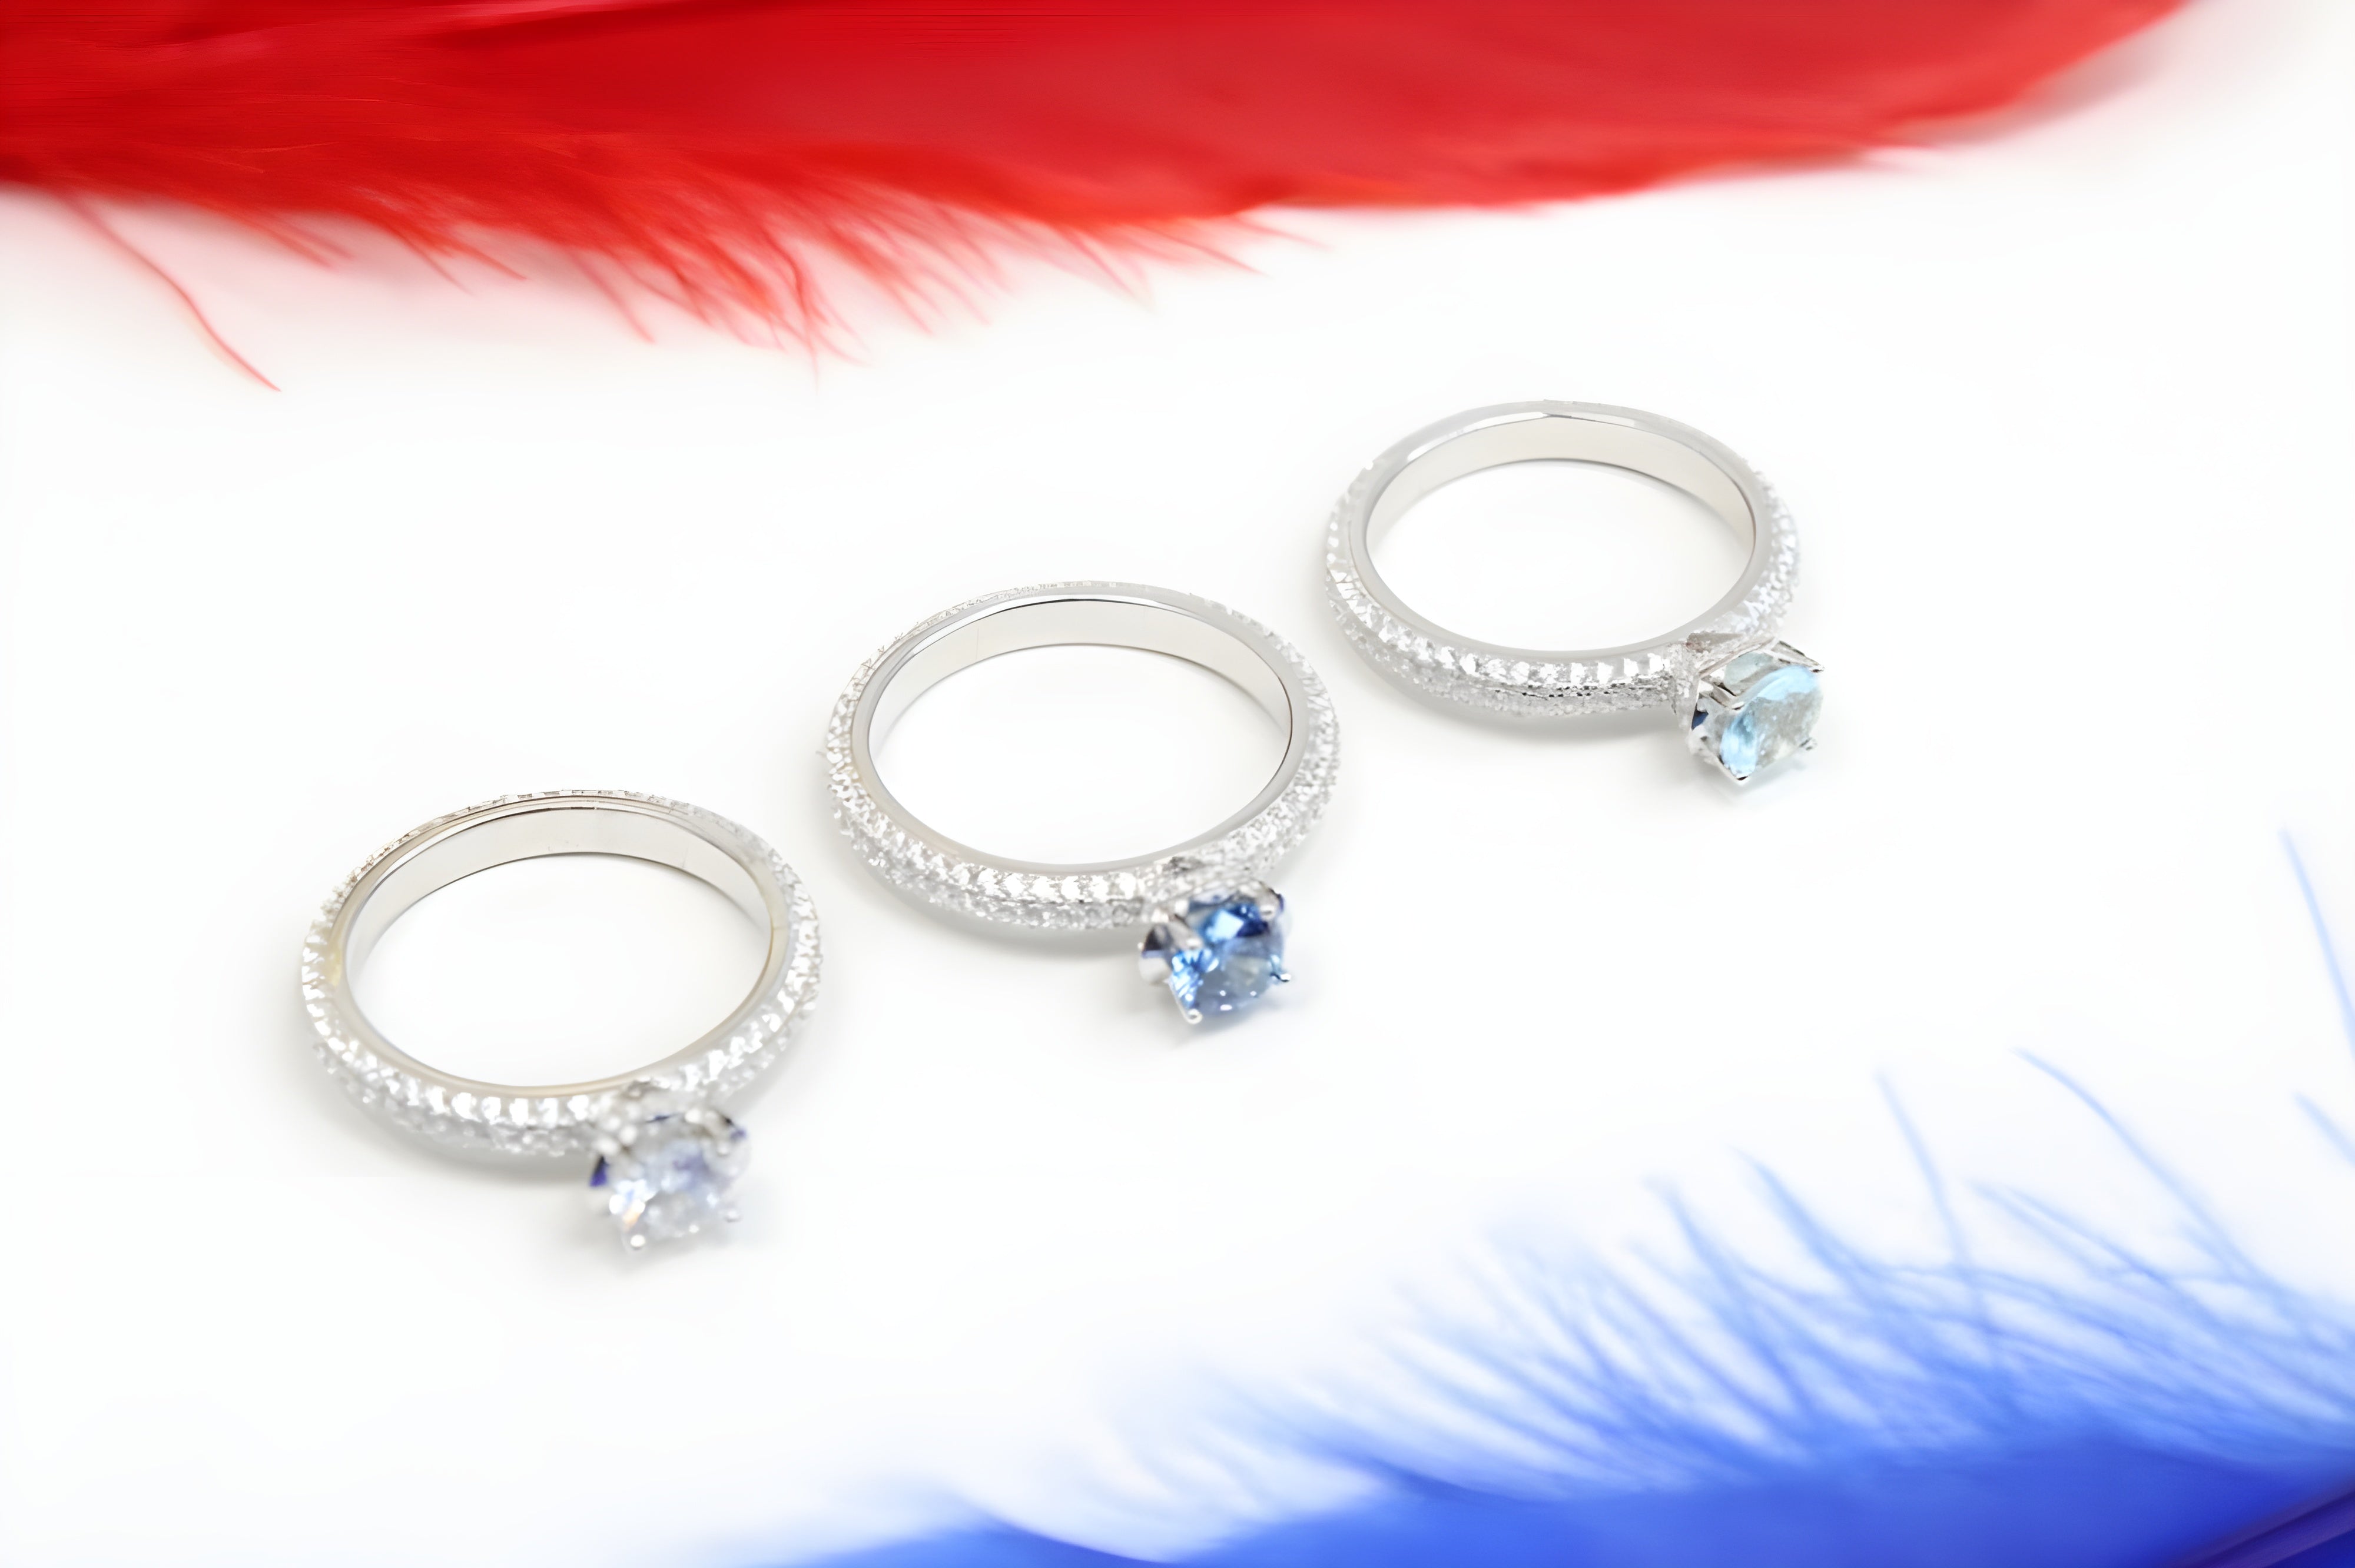 Celestial Sparkle Sterling Silver Swarovski Crystal Ring